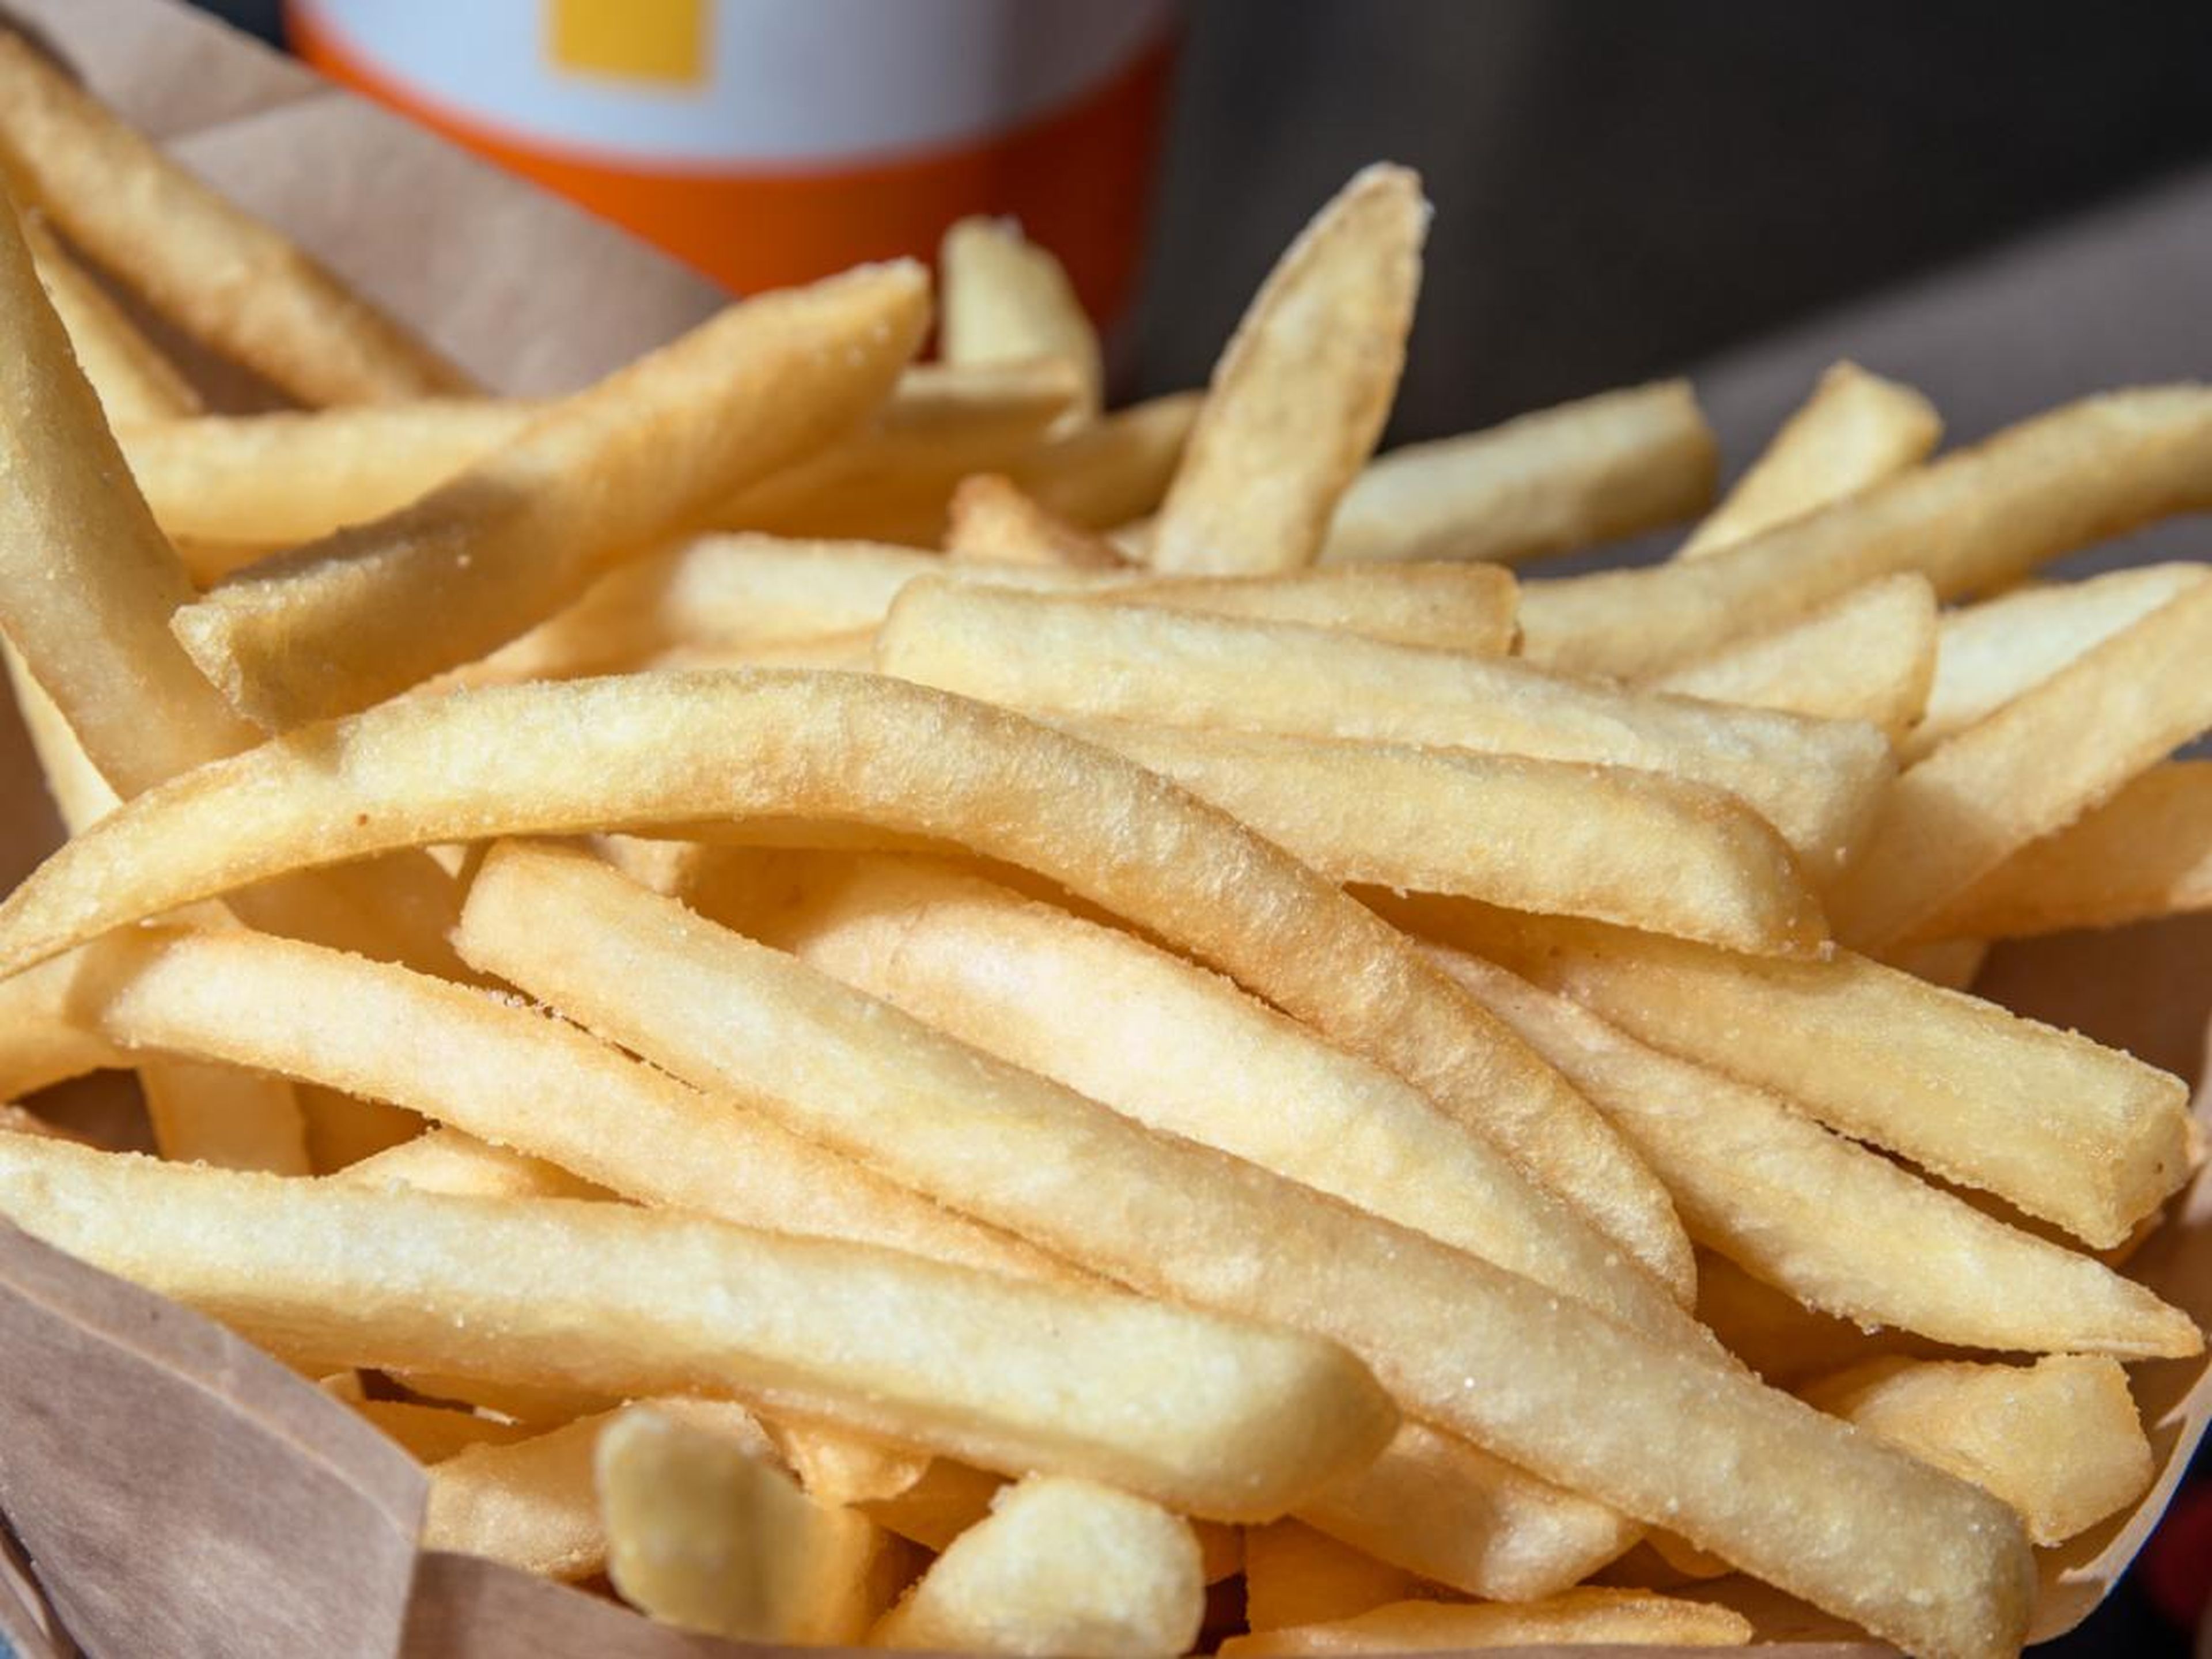 Half-cut fries